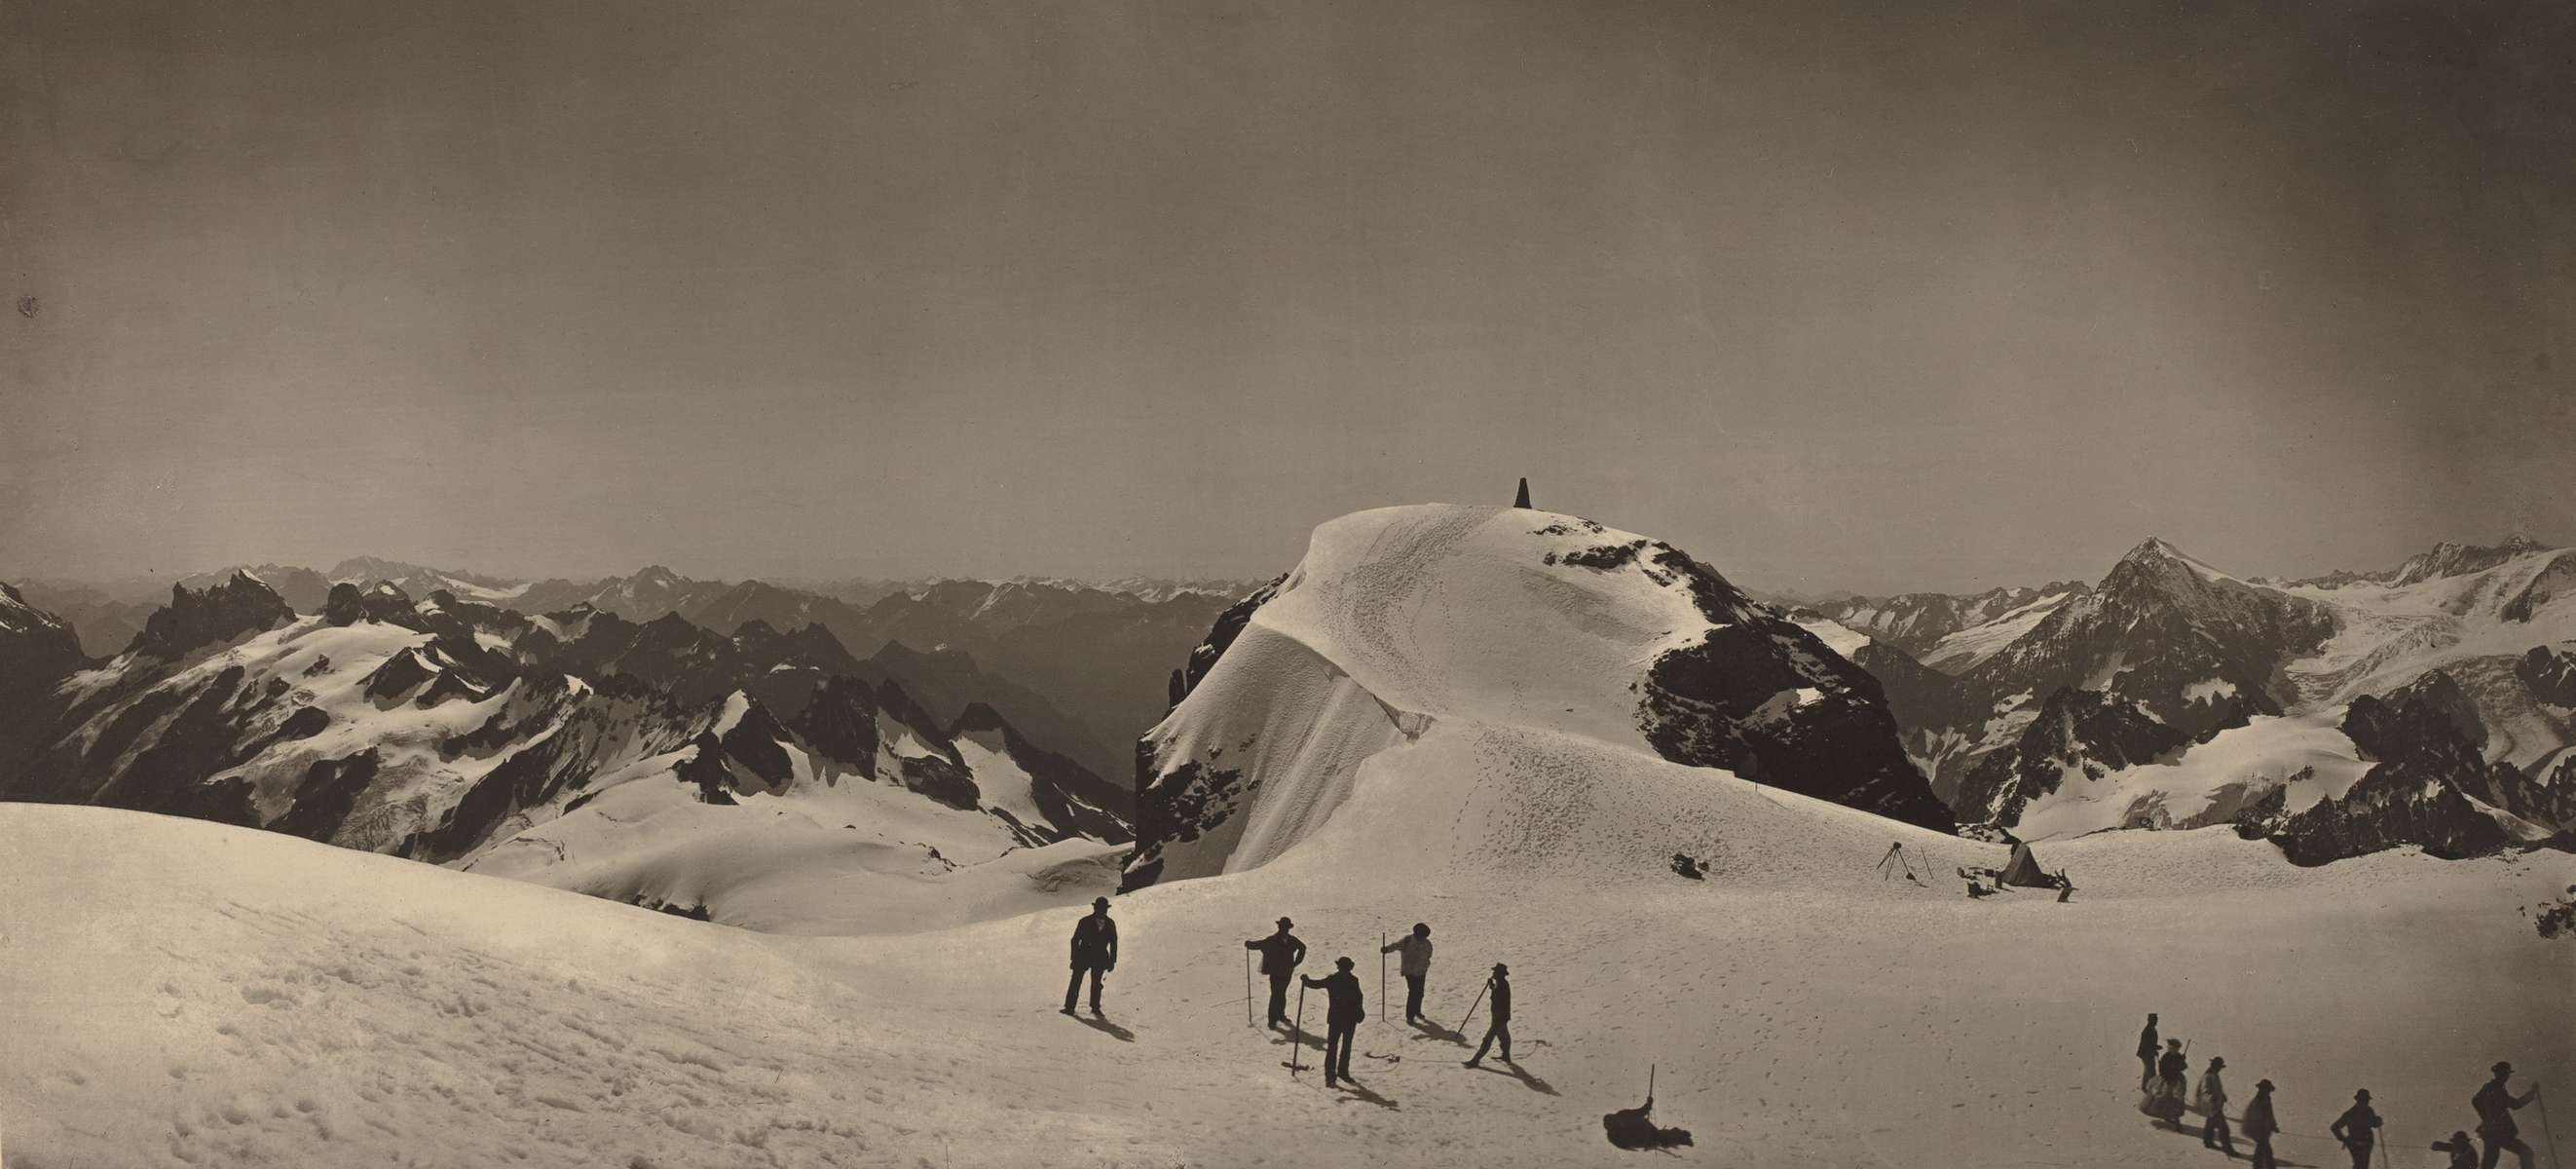 Adolphe Braun (French, 1812 - 1877 ), Summit of Mont Titlis, Switzerland, 1866, carbon print, Horace W. Goldsmith Foundation through Robert and Joyce Menschel